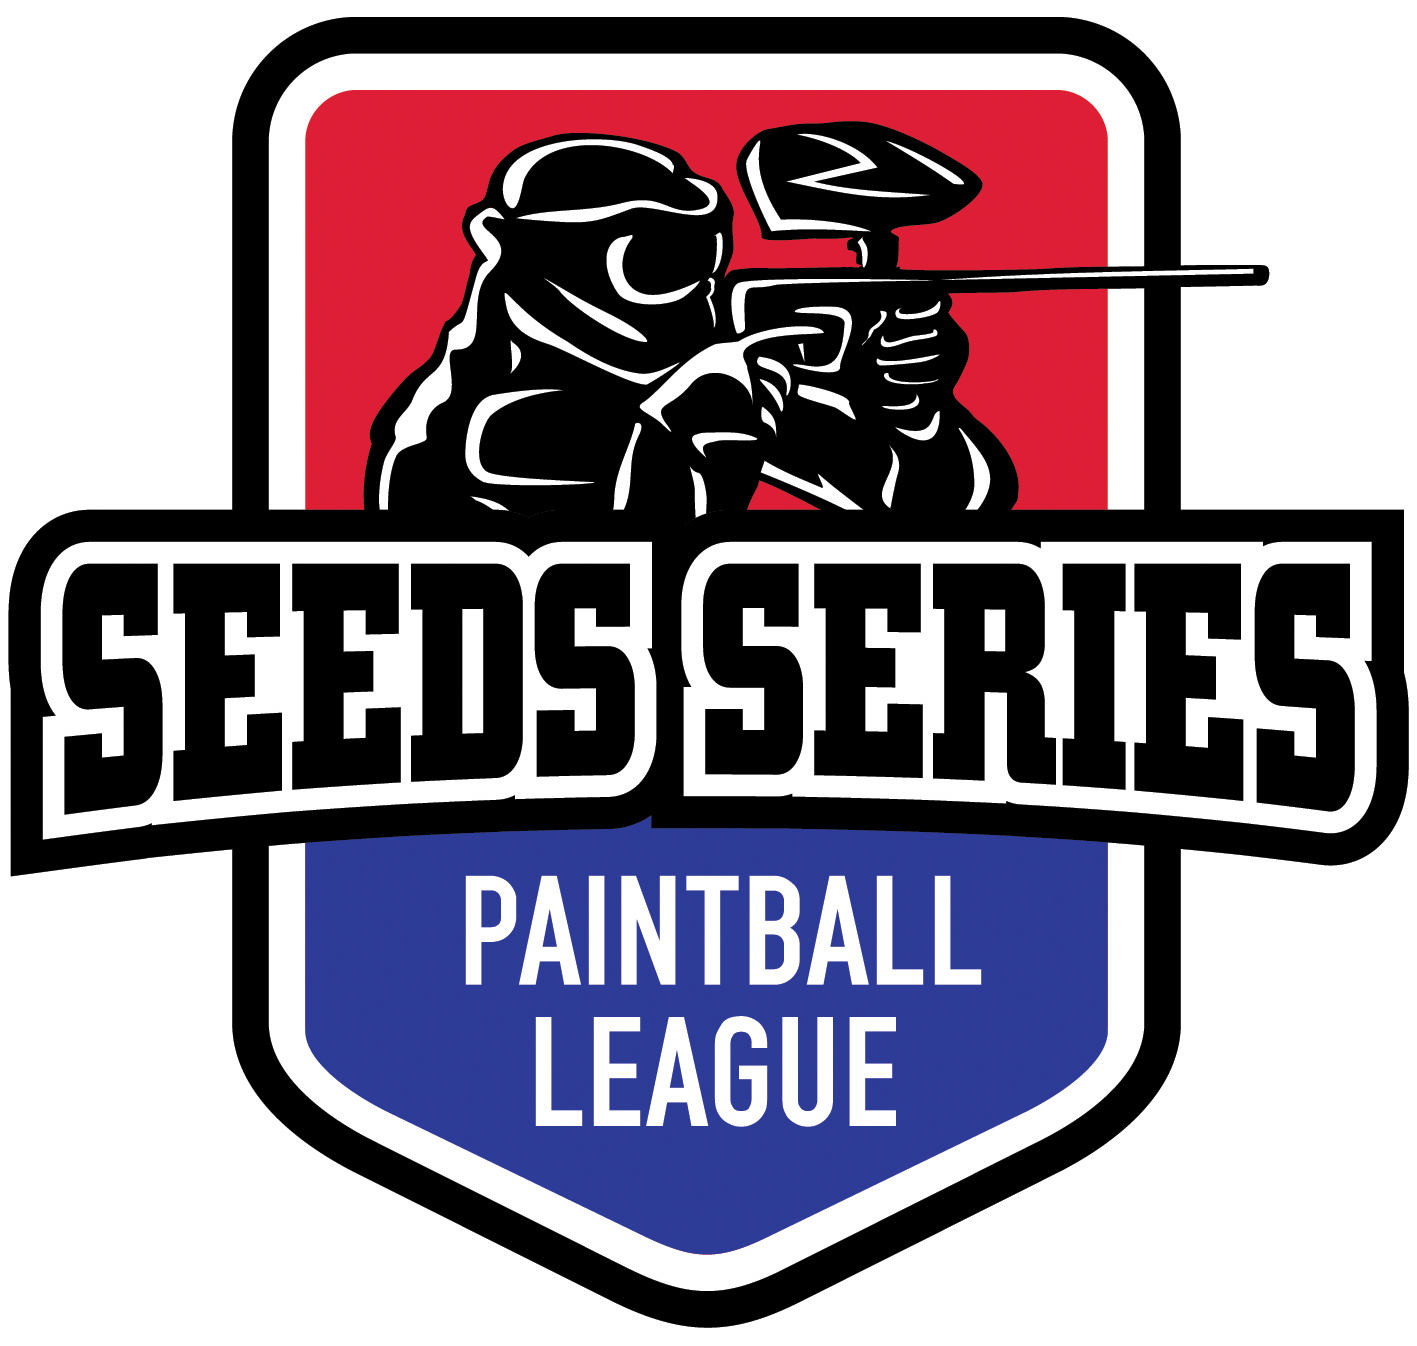 SEEDS Series Paintball League